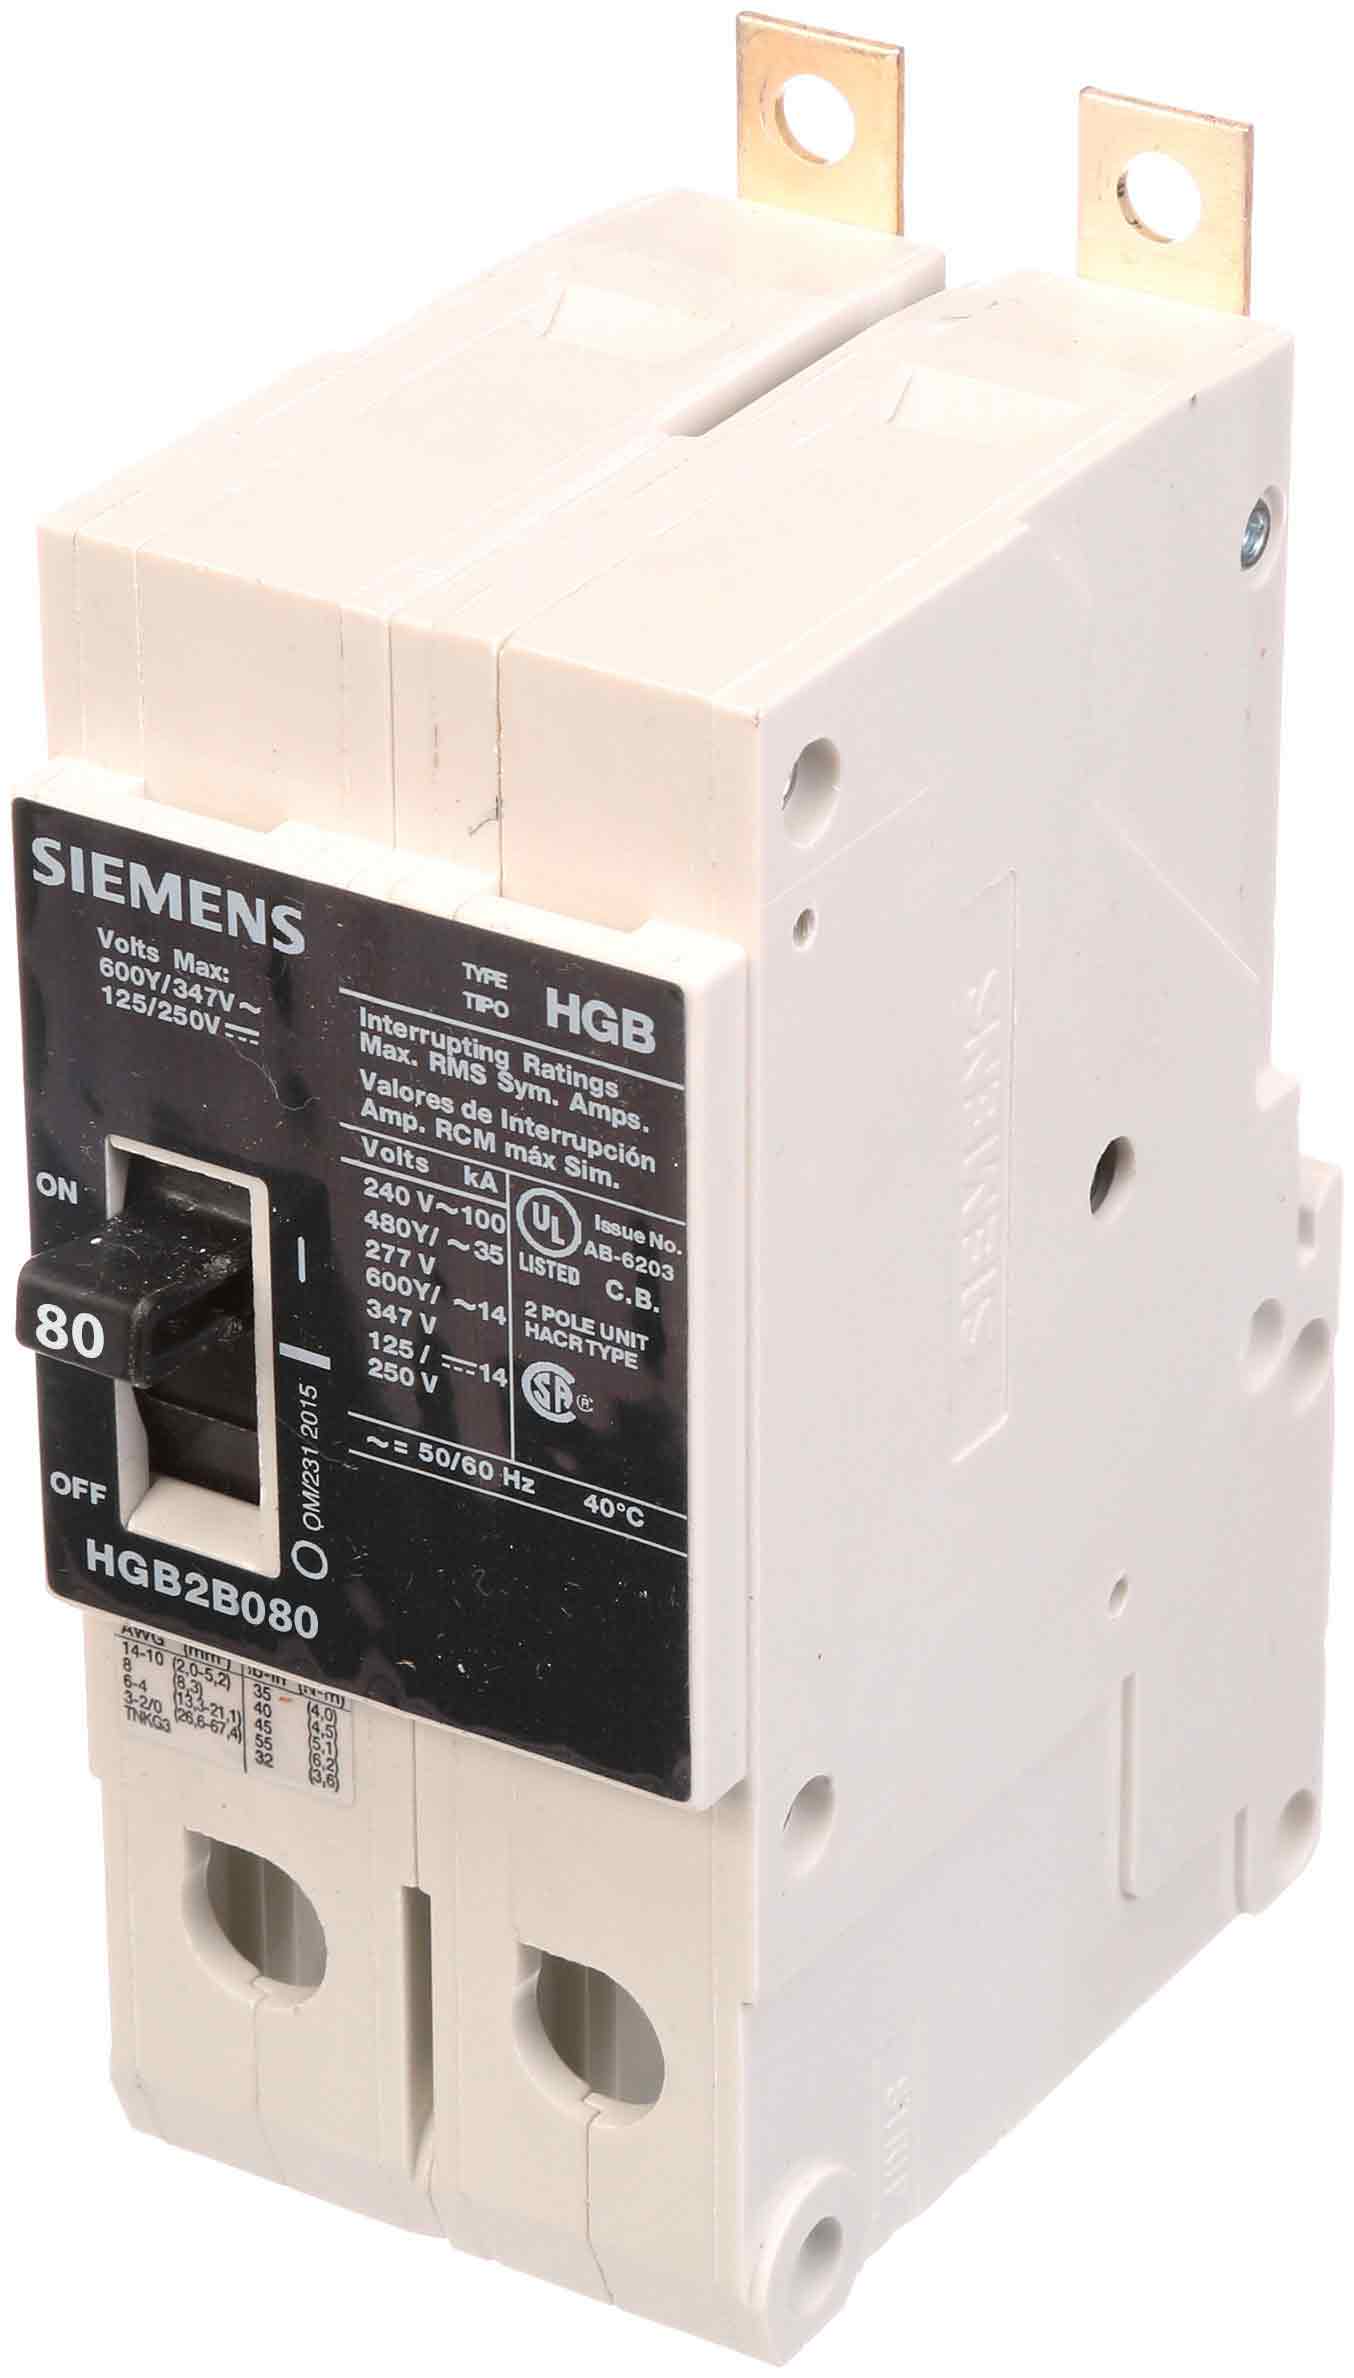 HGB2B080B - Siemens - Molded Case Circuit Breaker